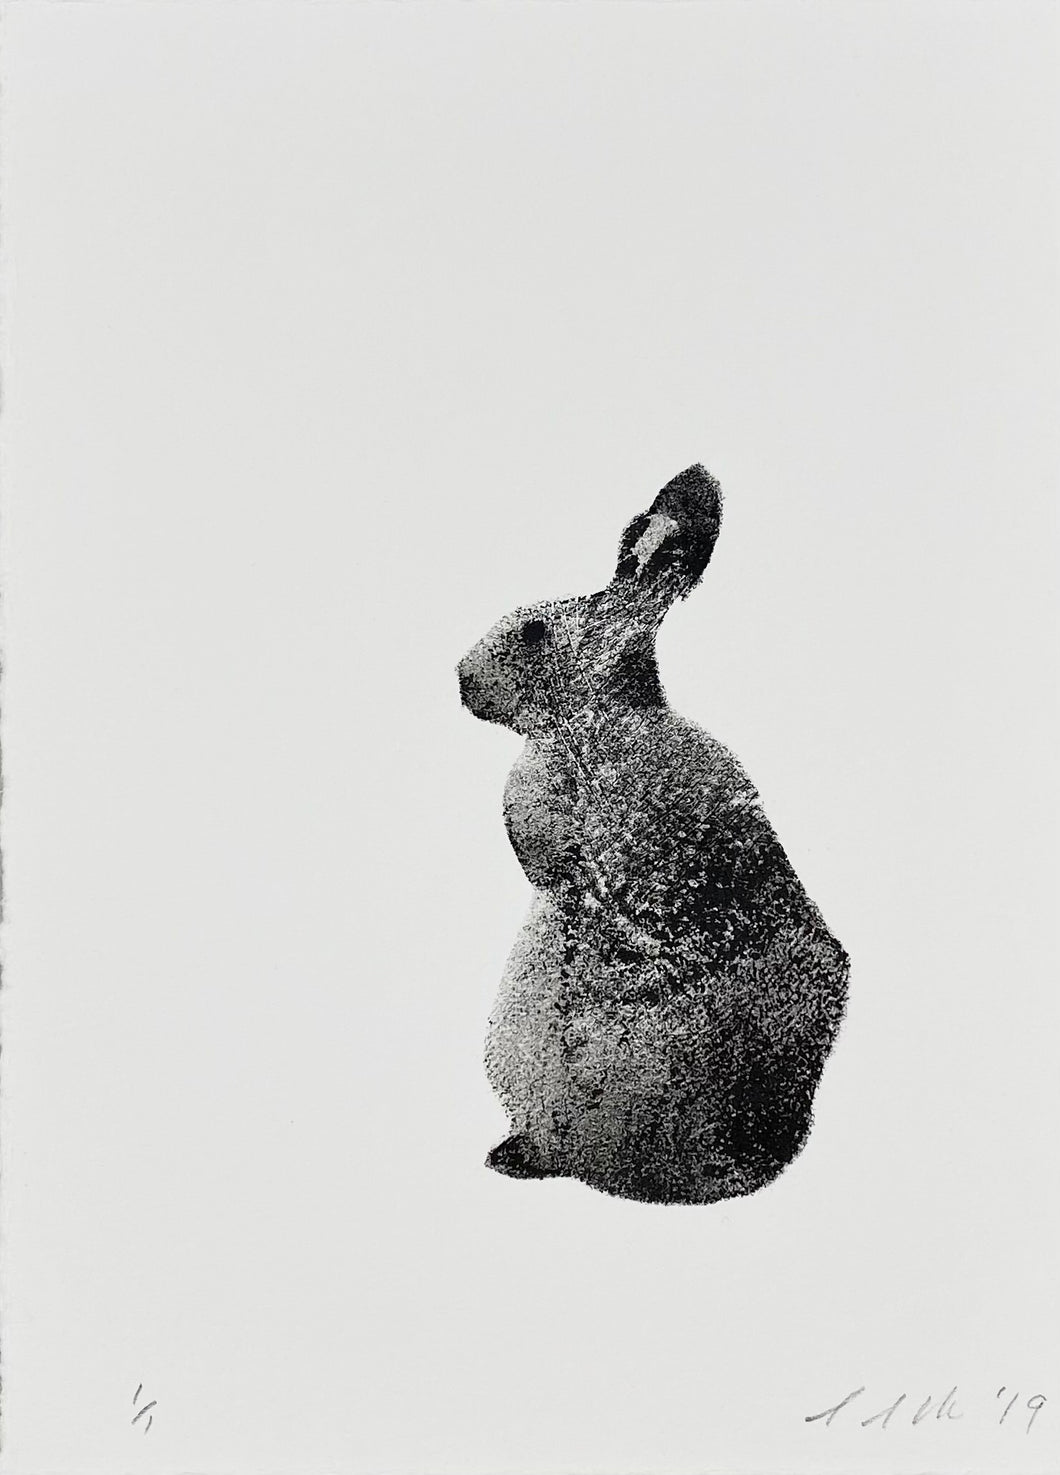 Rabbit Series 19 by Susan Hall